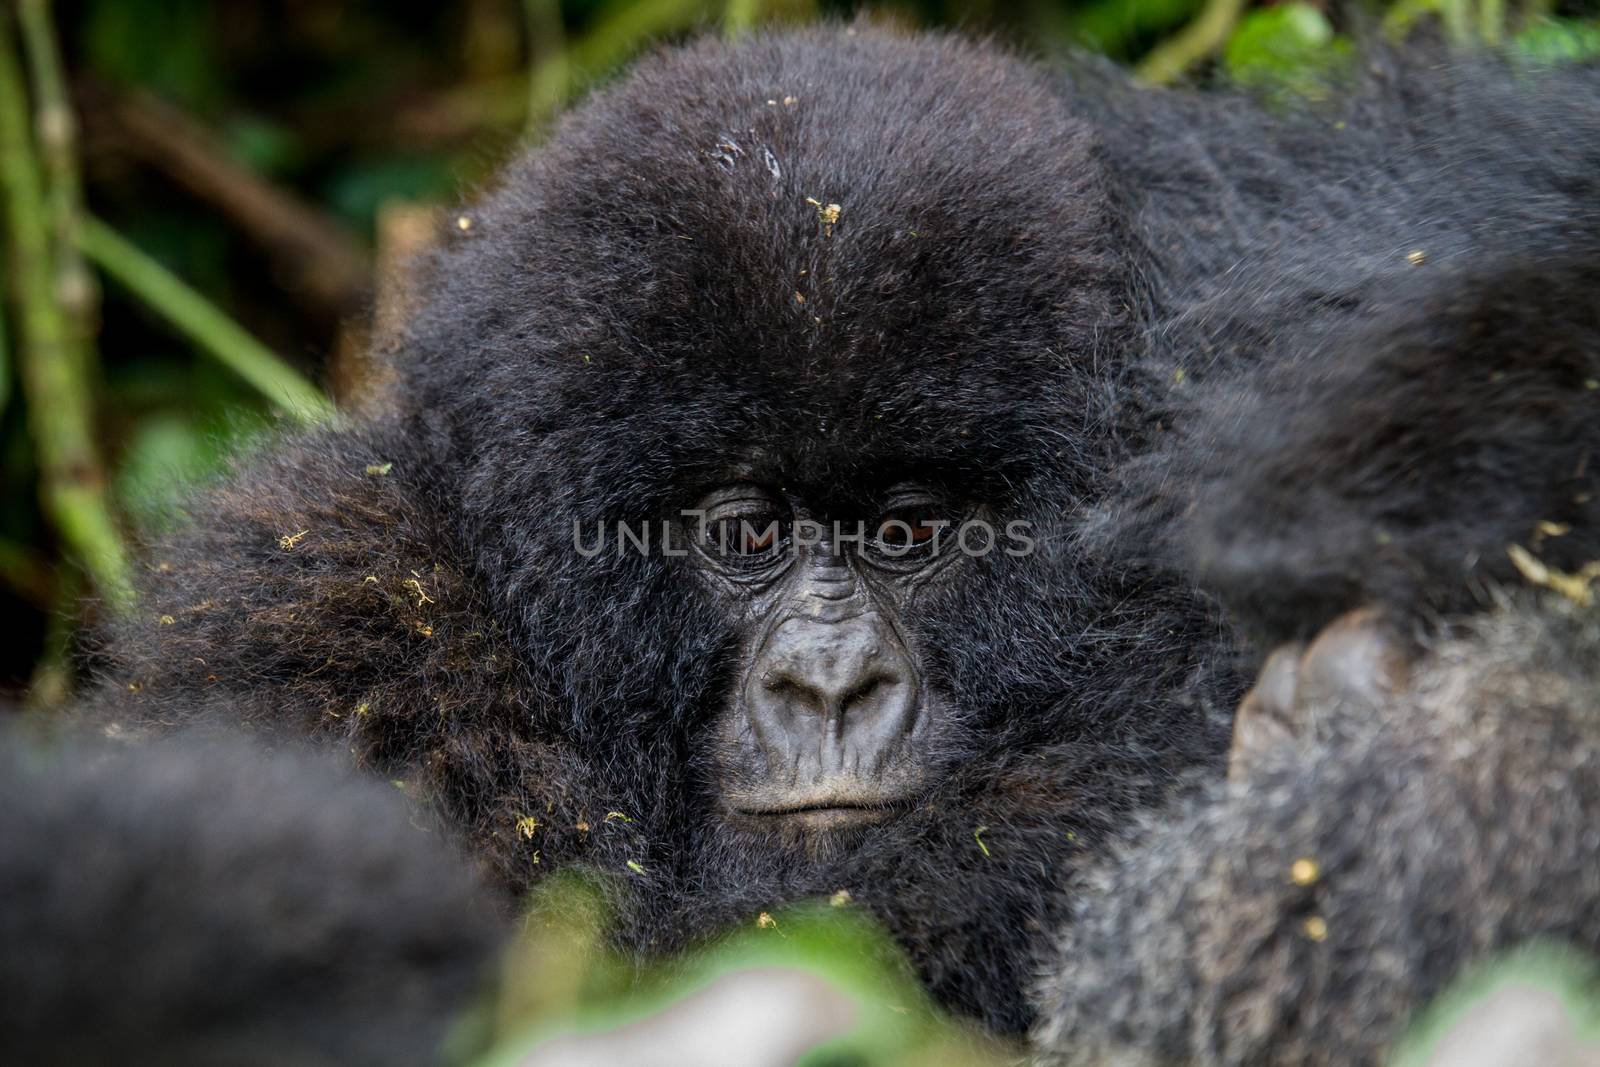 Close up of a baby Mountain gorilla in the Virunga National Park, Democratic Republic Of Congo.